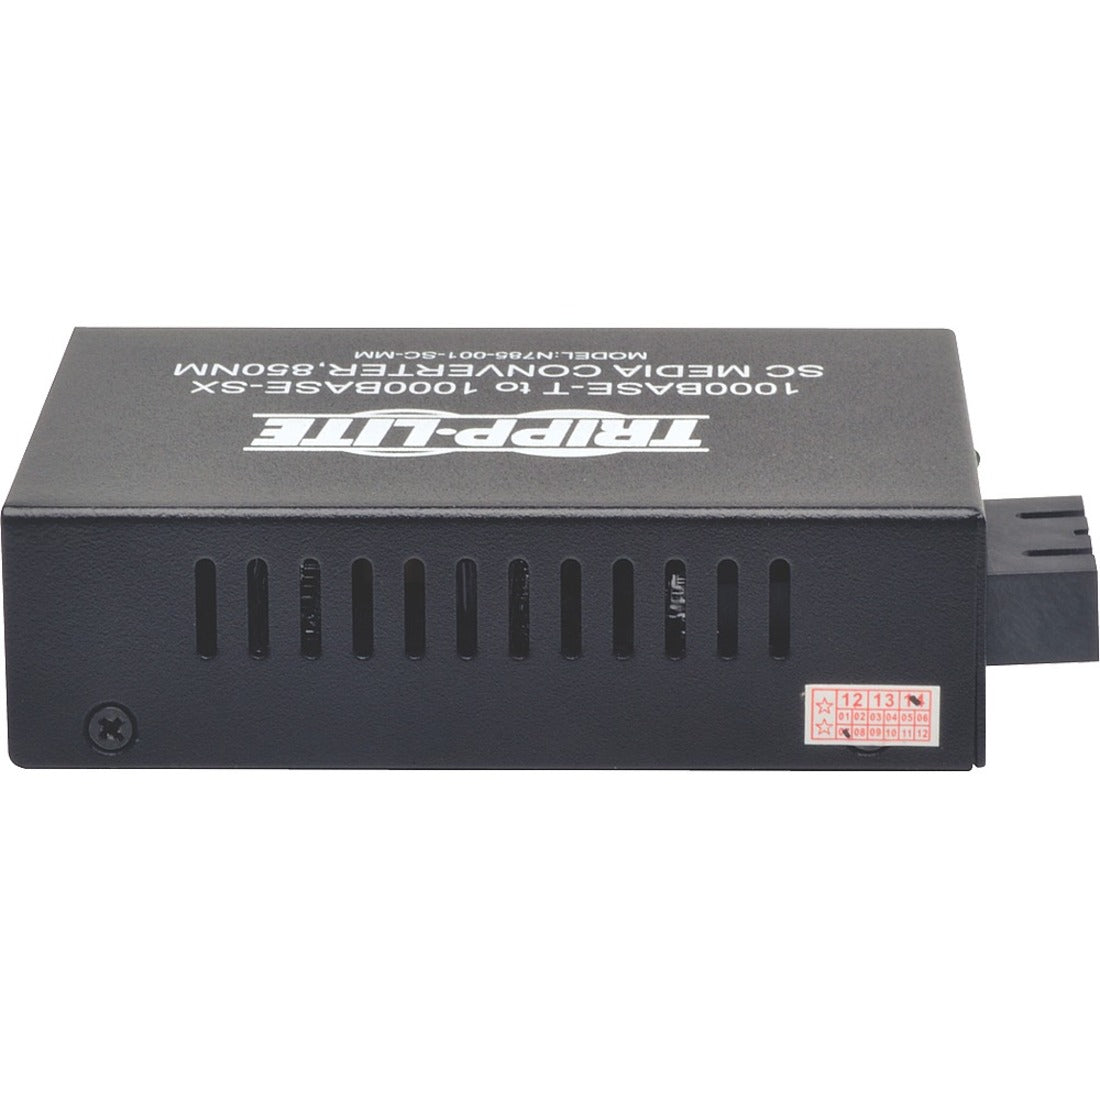 Tripp Lite N785-001-SC-MM 10/100/1000 SC Multimode Media Converter, 550M, 850nm, 2-Year Warranty